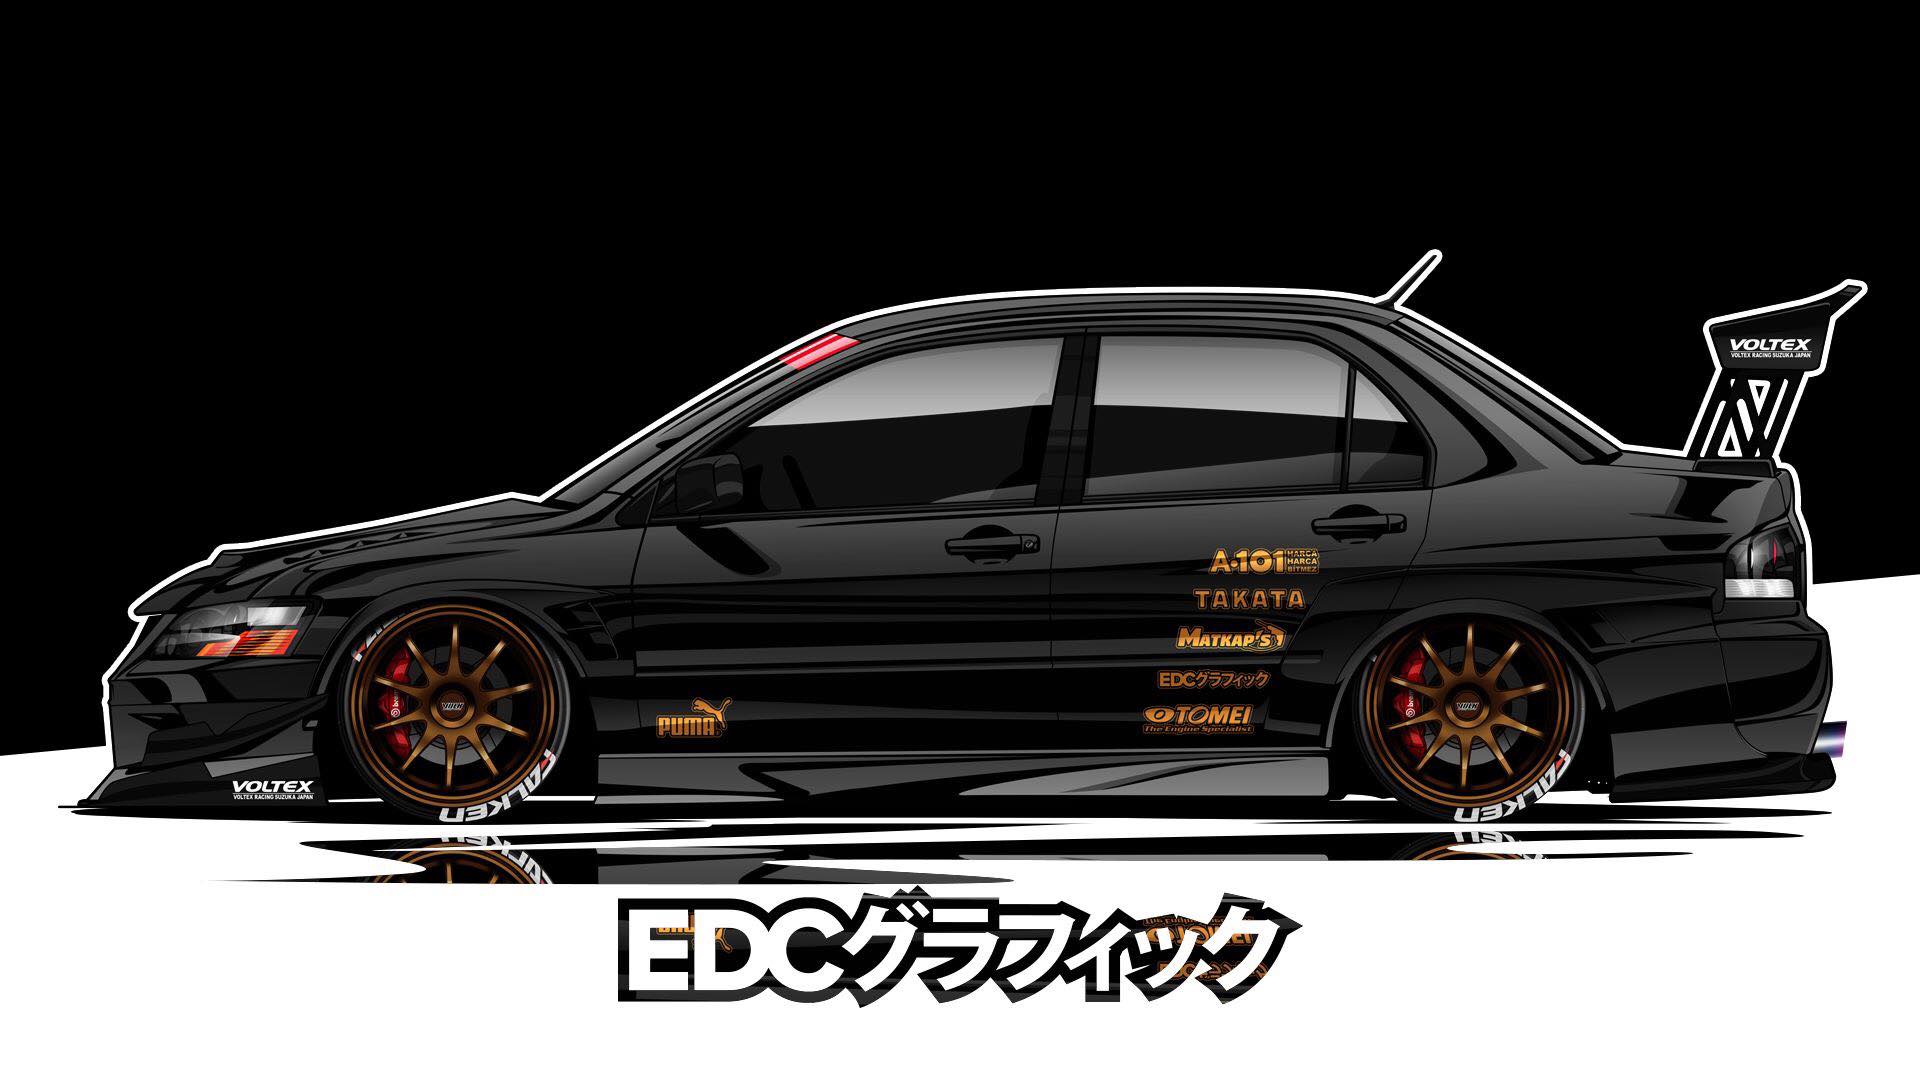 EDC Graphics Mitsubishi Lancer Evolution JDM Render Car Artwork Black Cars Vehicle Japanese Cars Mit 1920x1080